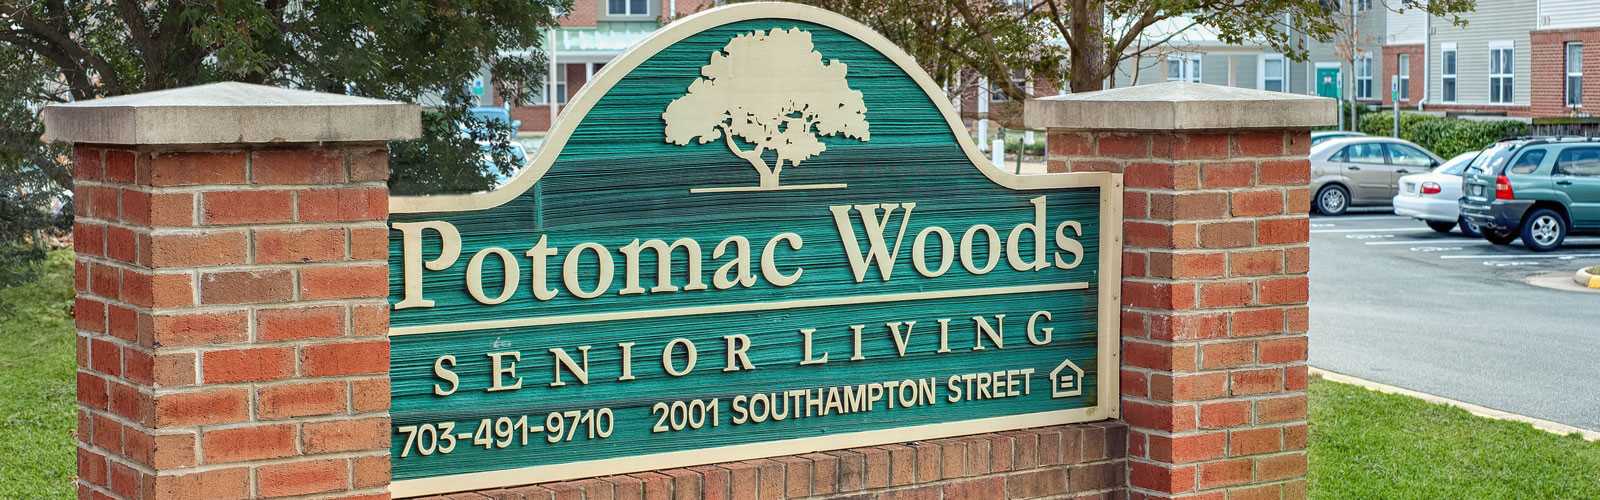 Potomac Woods Senior Living - Affordable Community